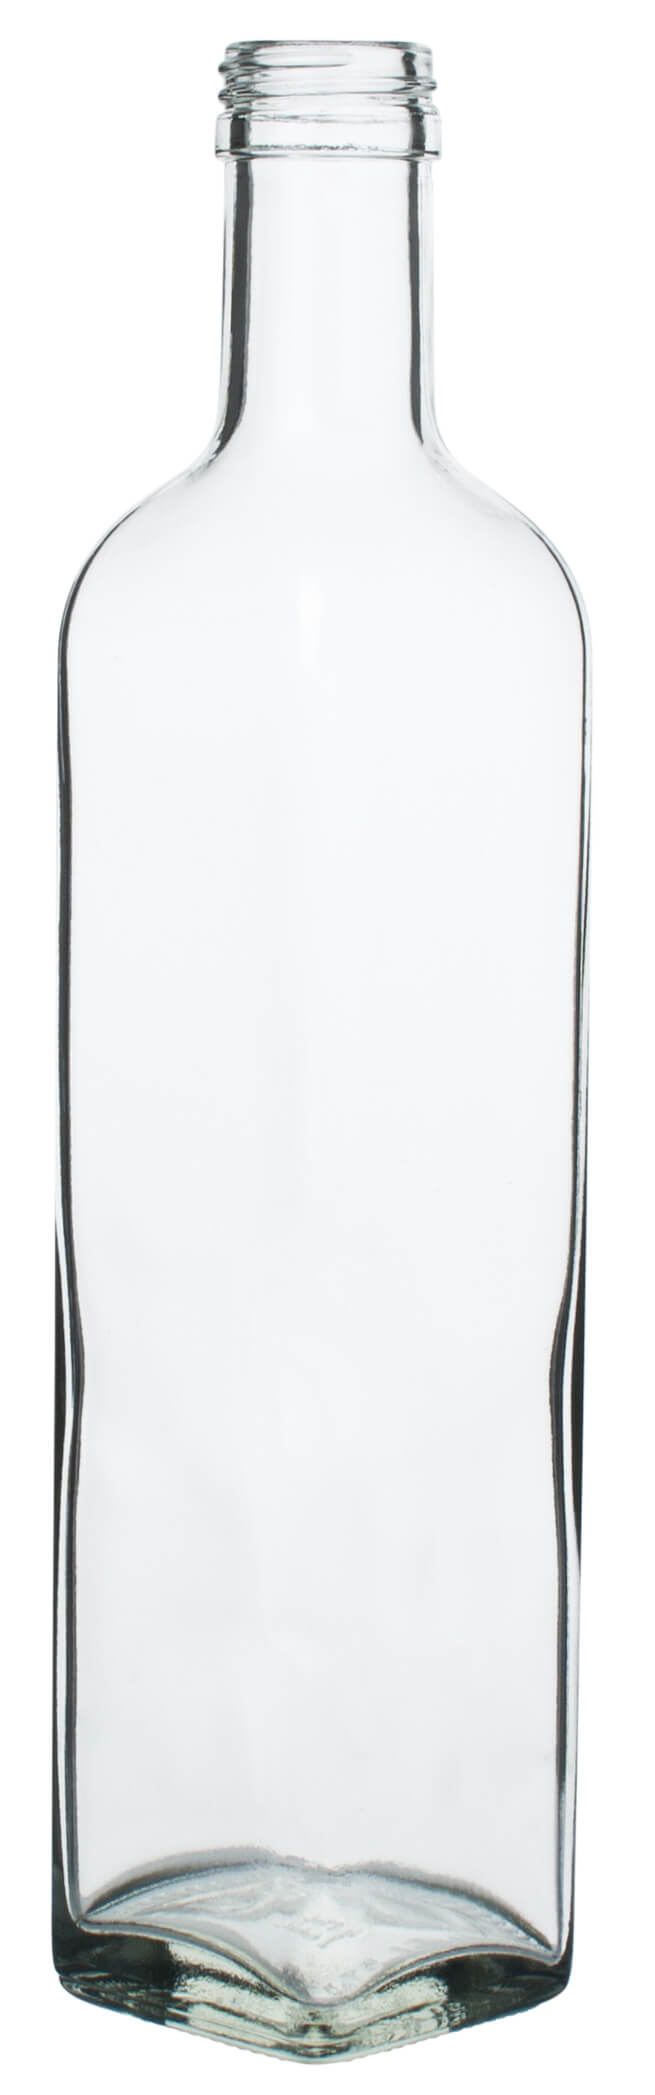 Glass bottle square - 500ml